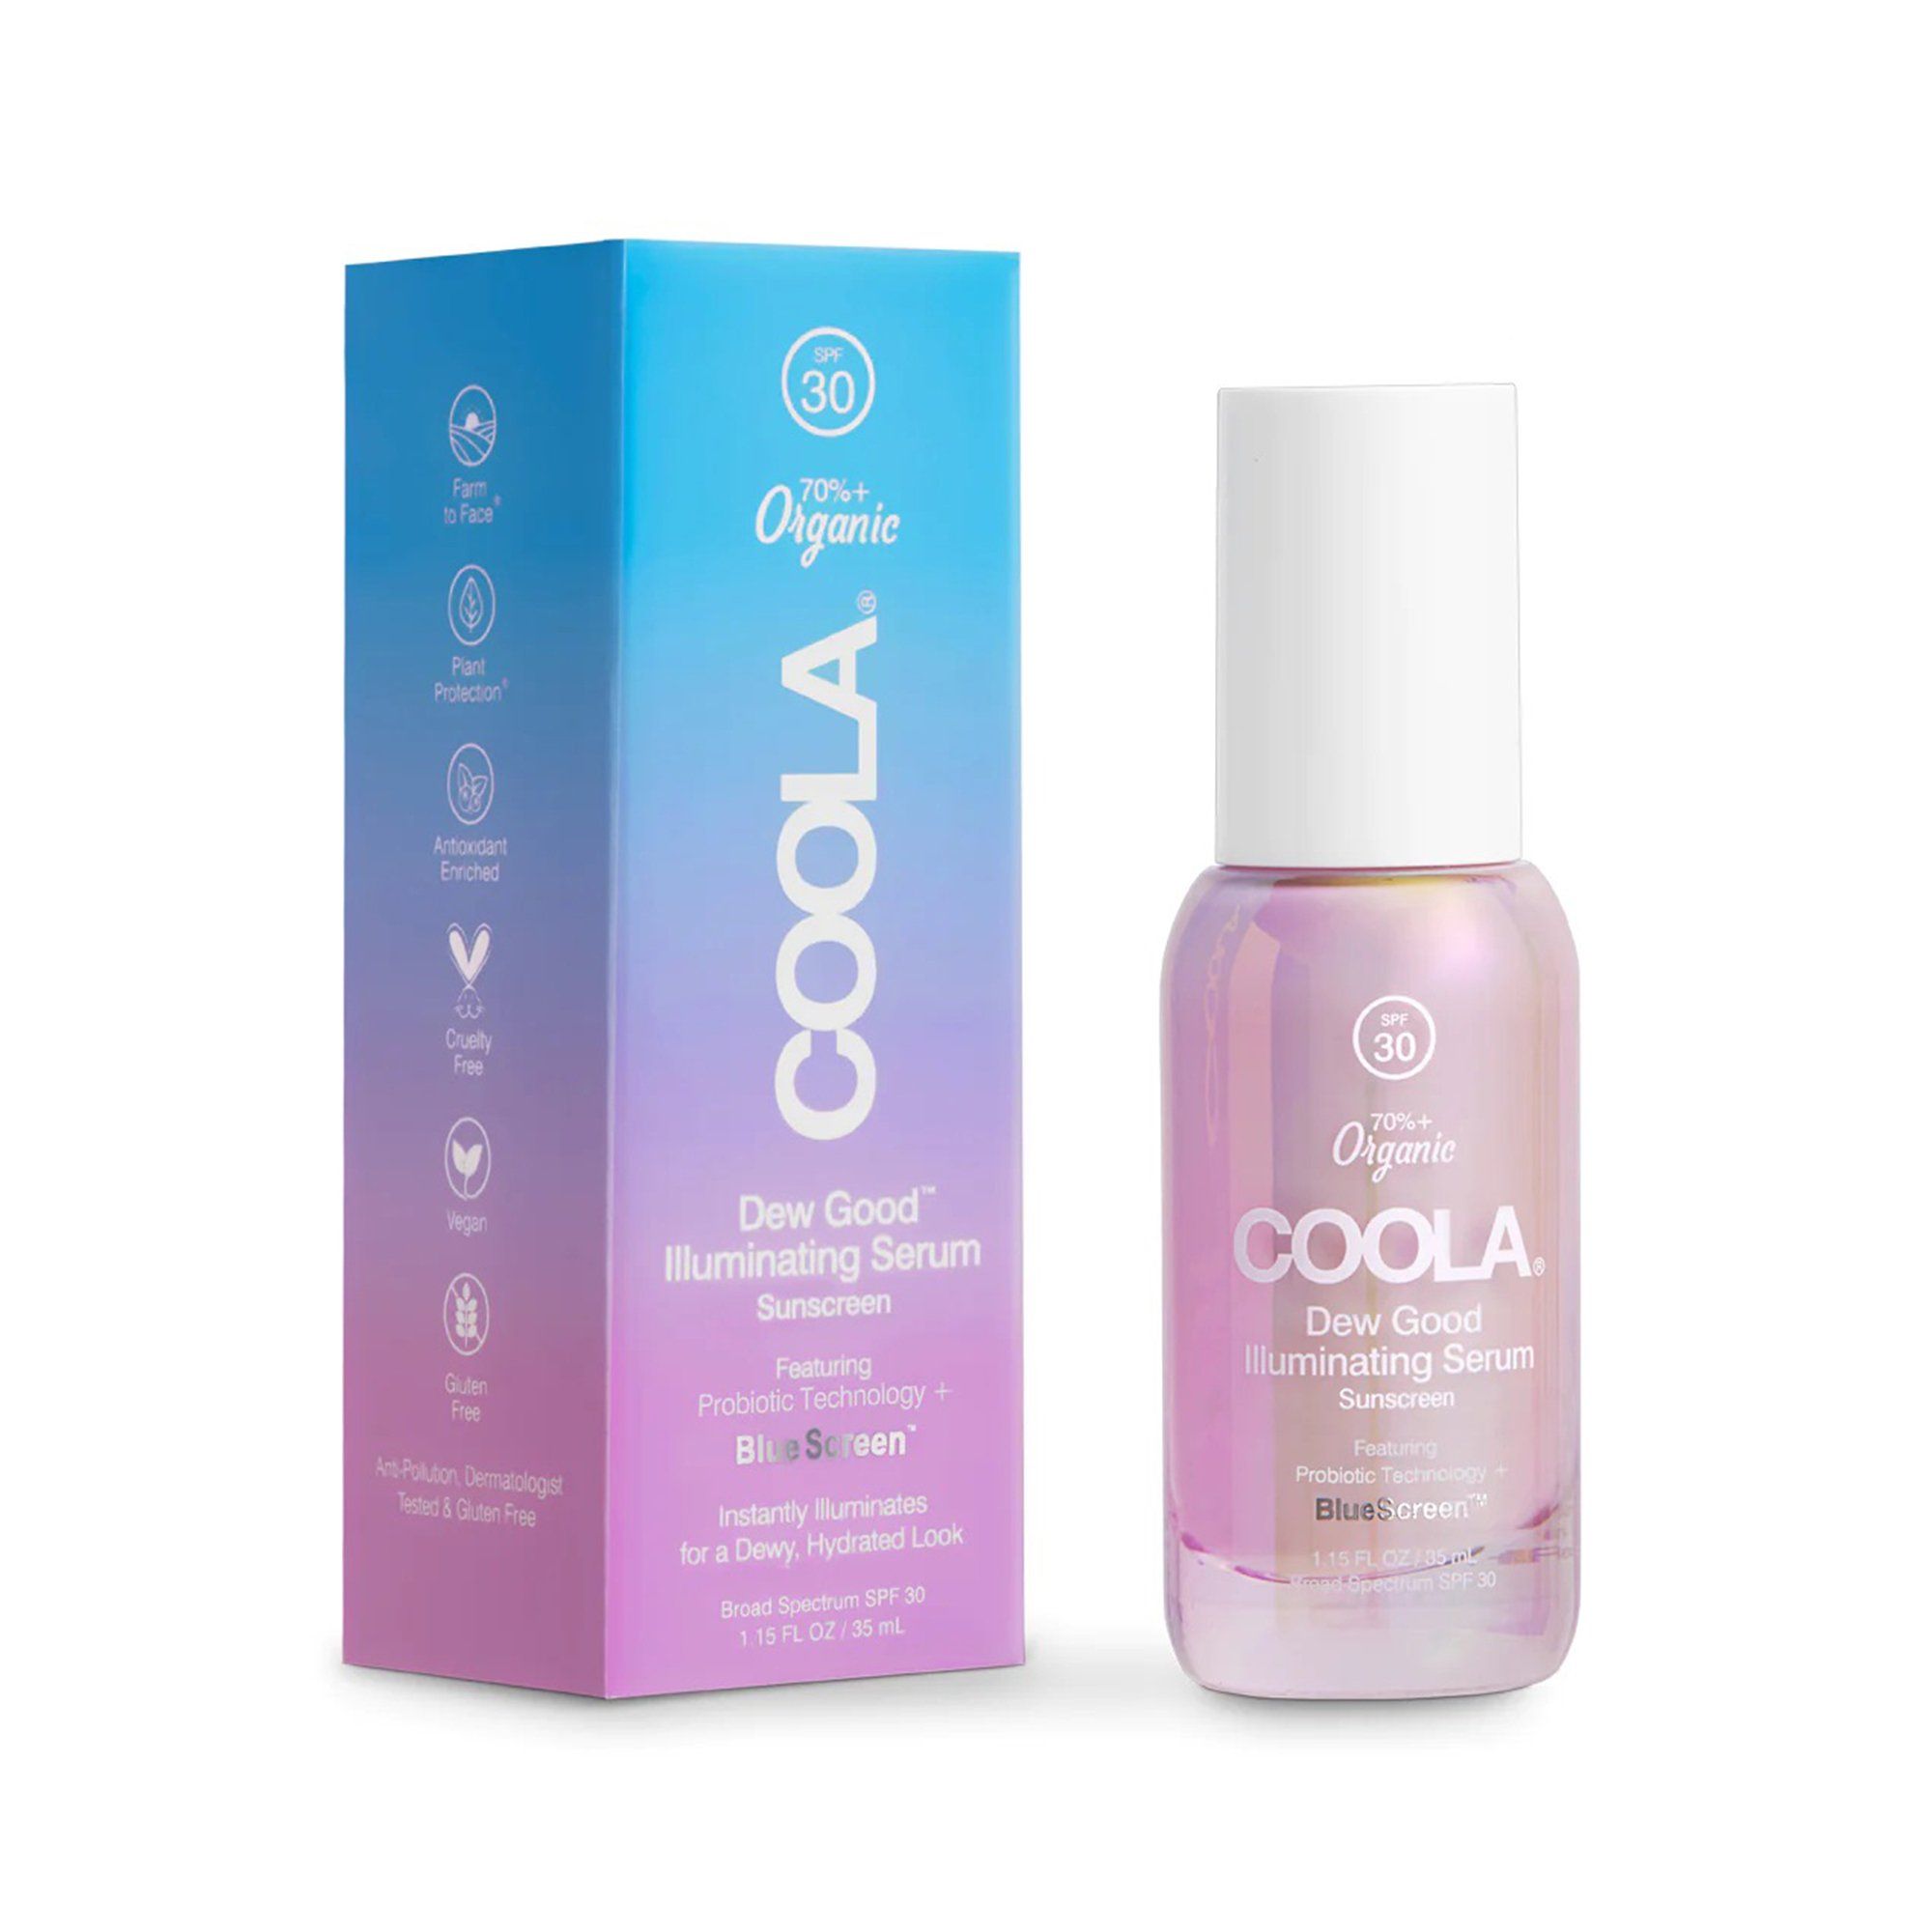 COOLA Dew Good Illuminating Serum Sunscreen Pump with Probiotic Technology, SPF 30 - 1.5 fl oz